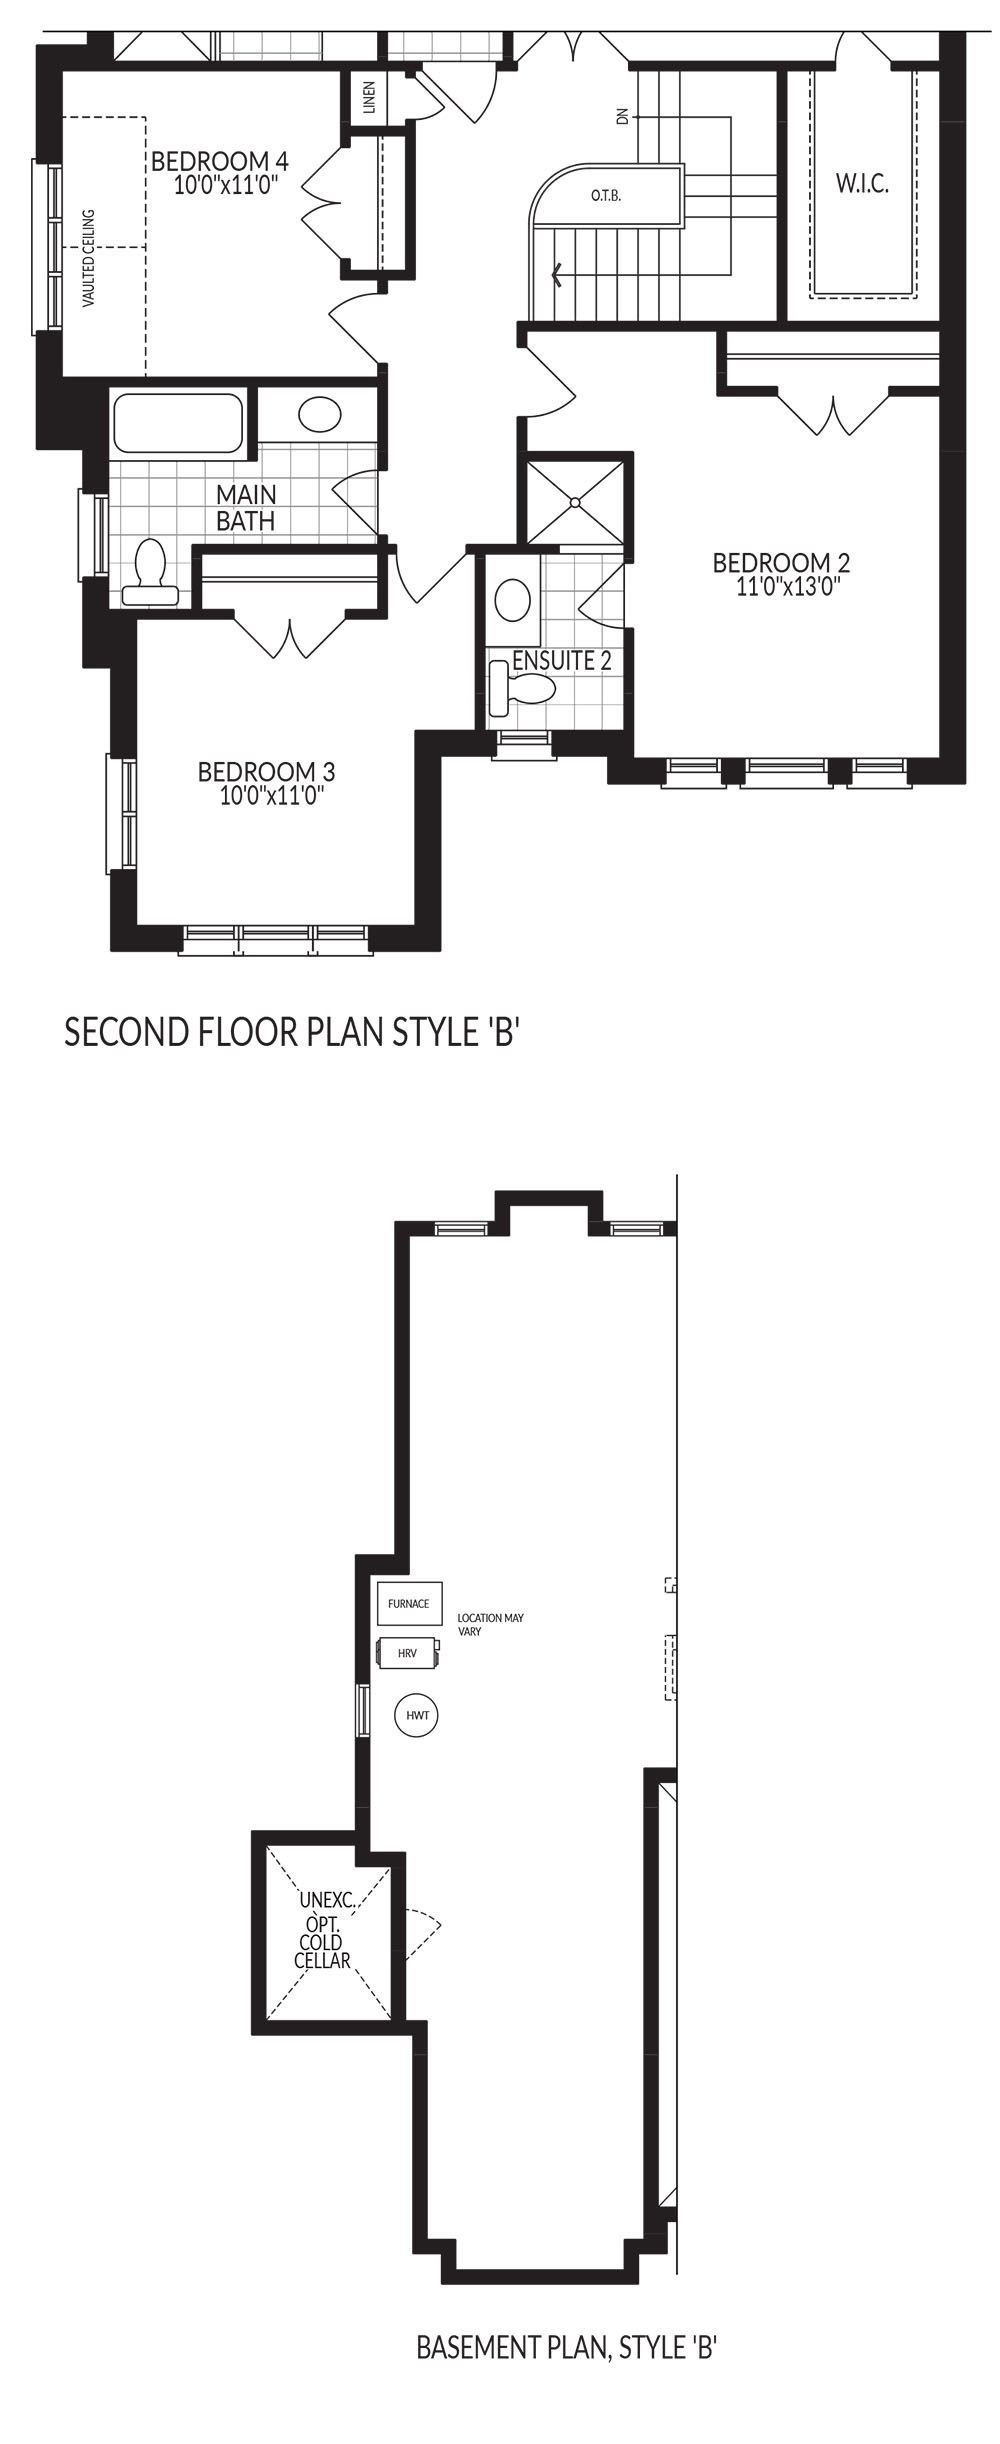 Second Floor + Basement Plan Style B